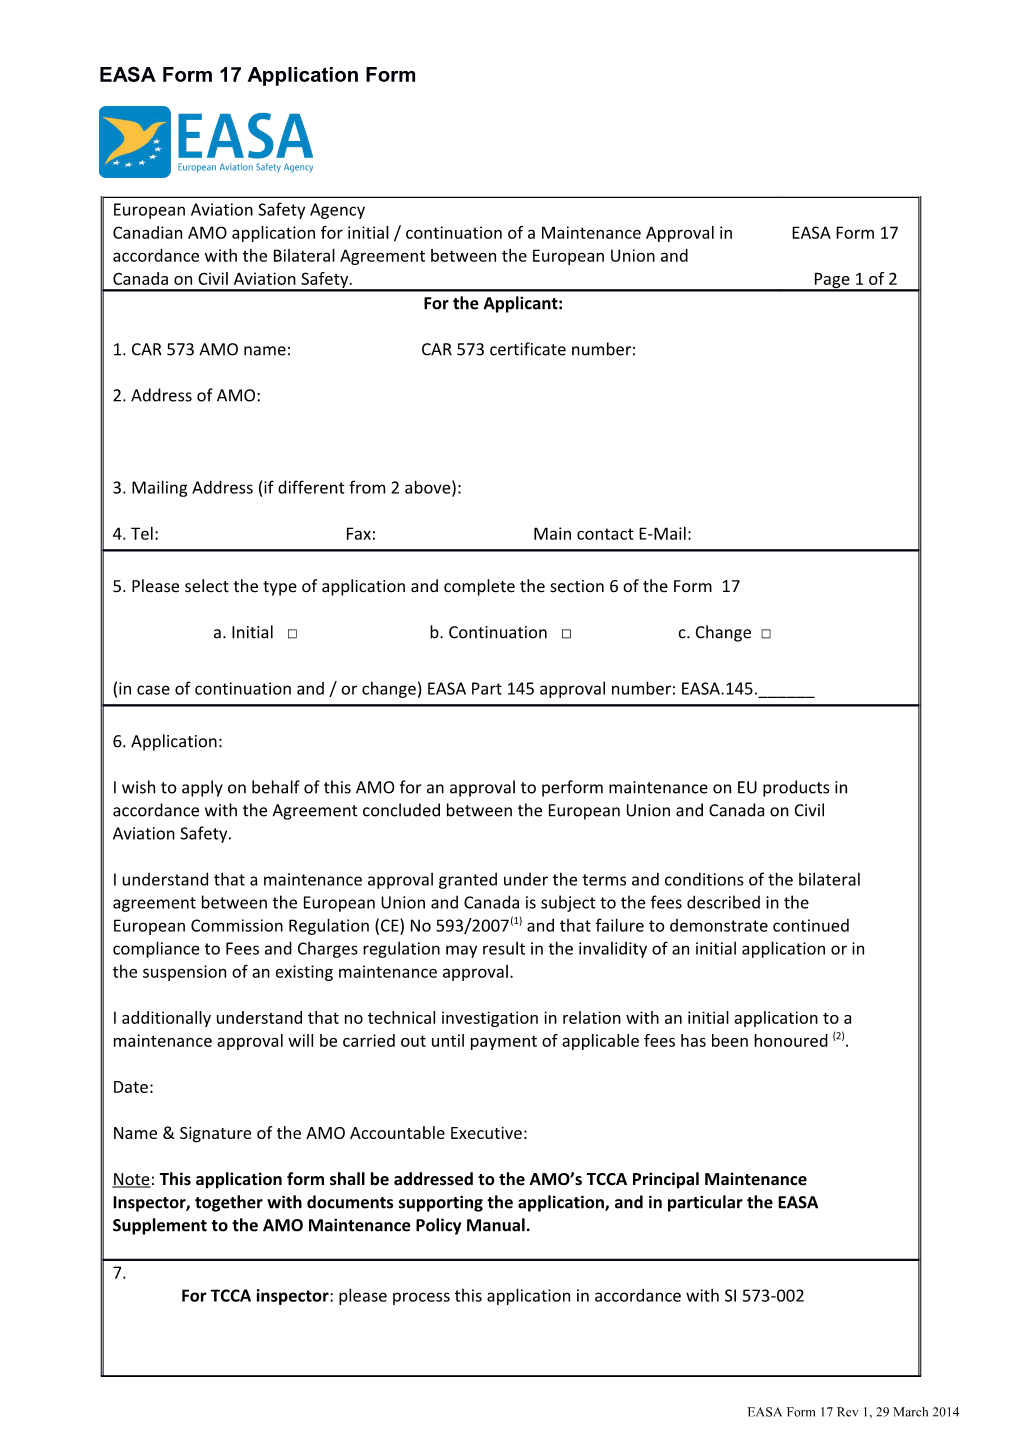 EASA Form17 Application Form